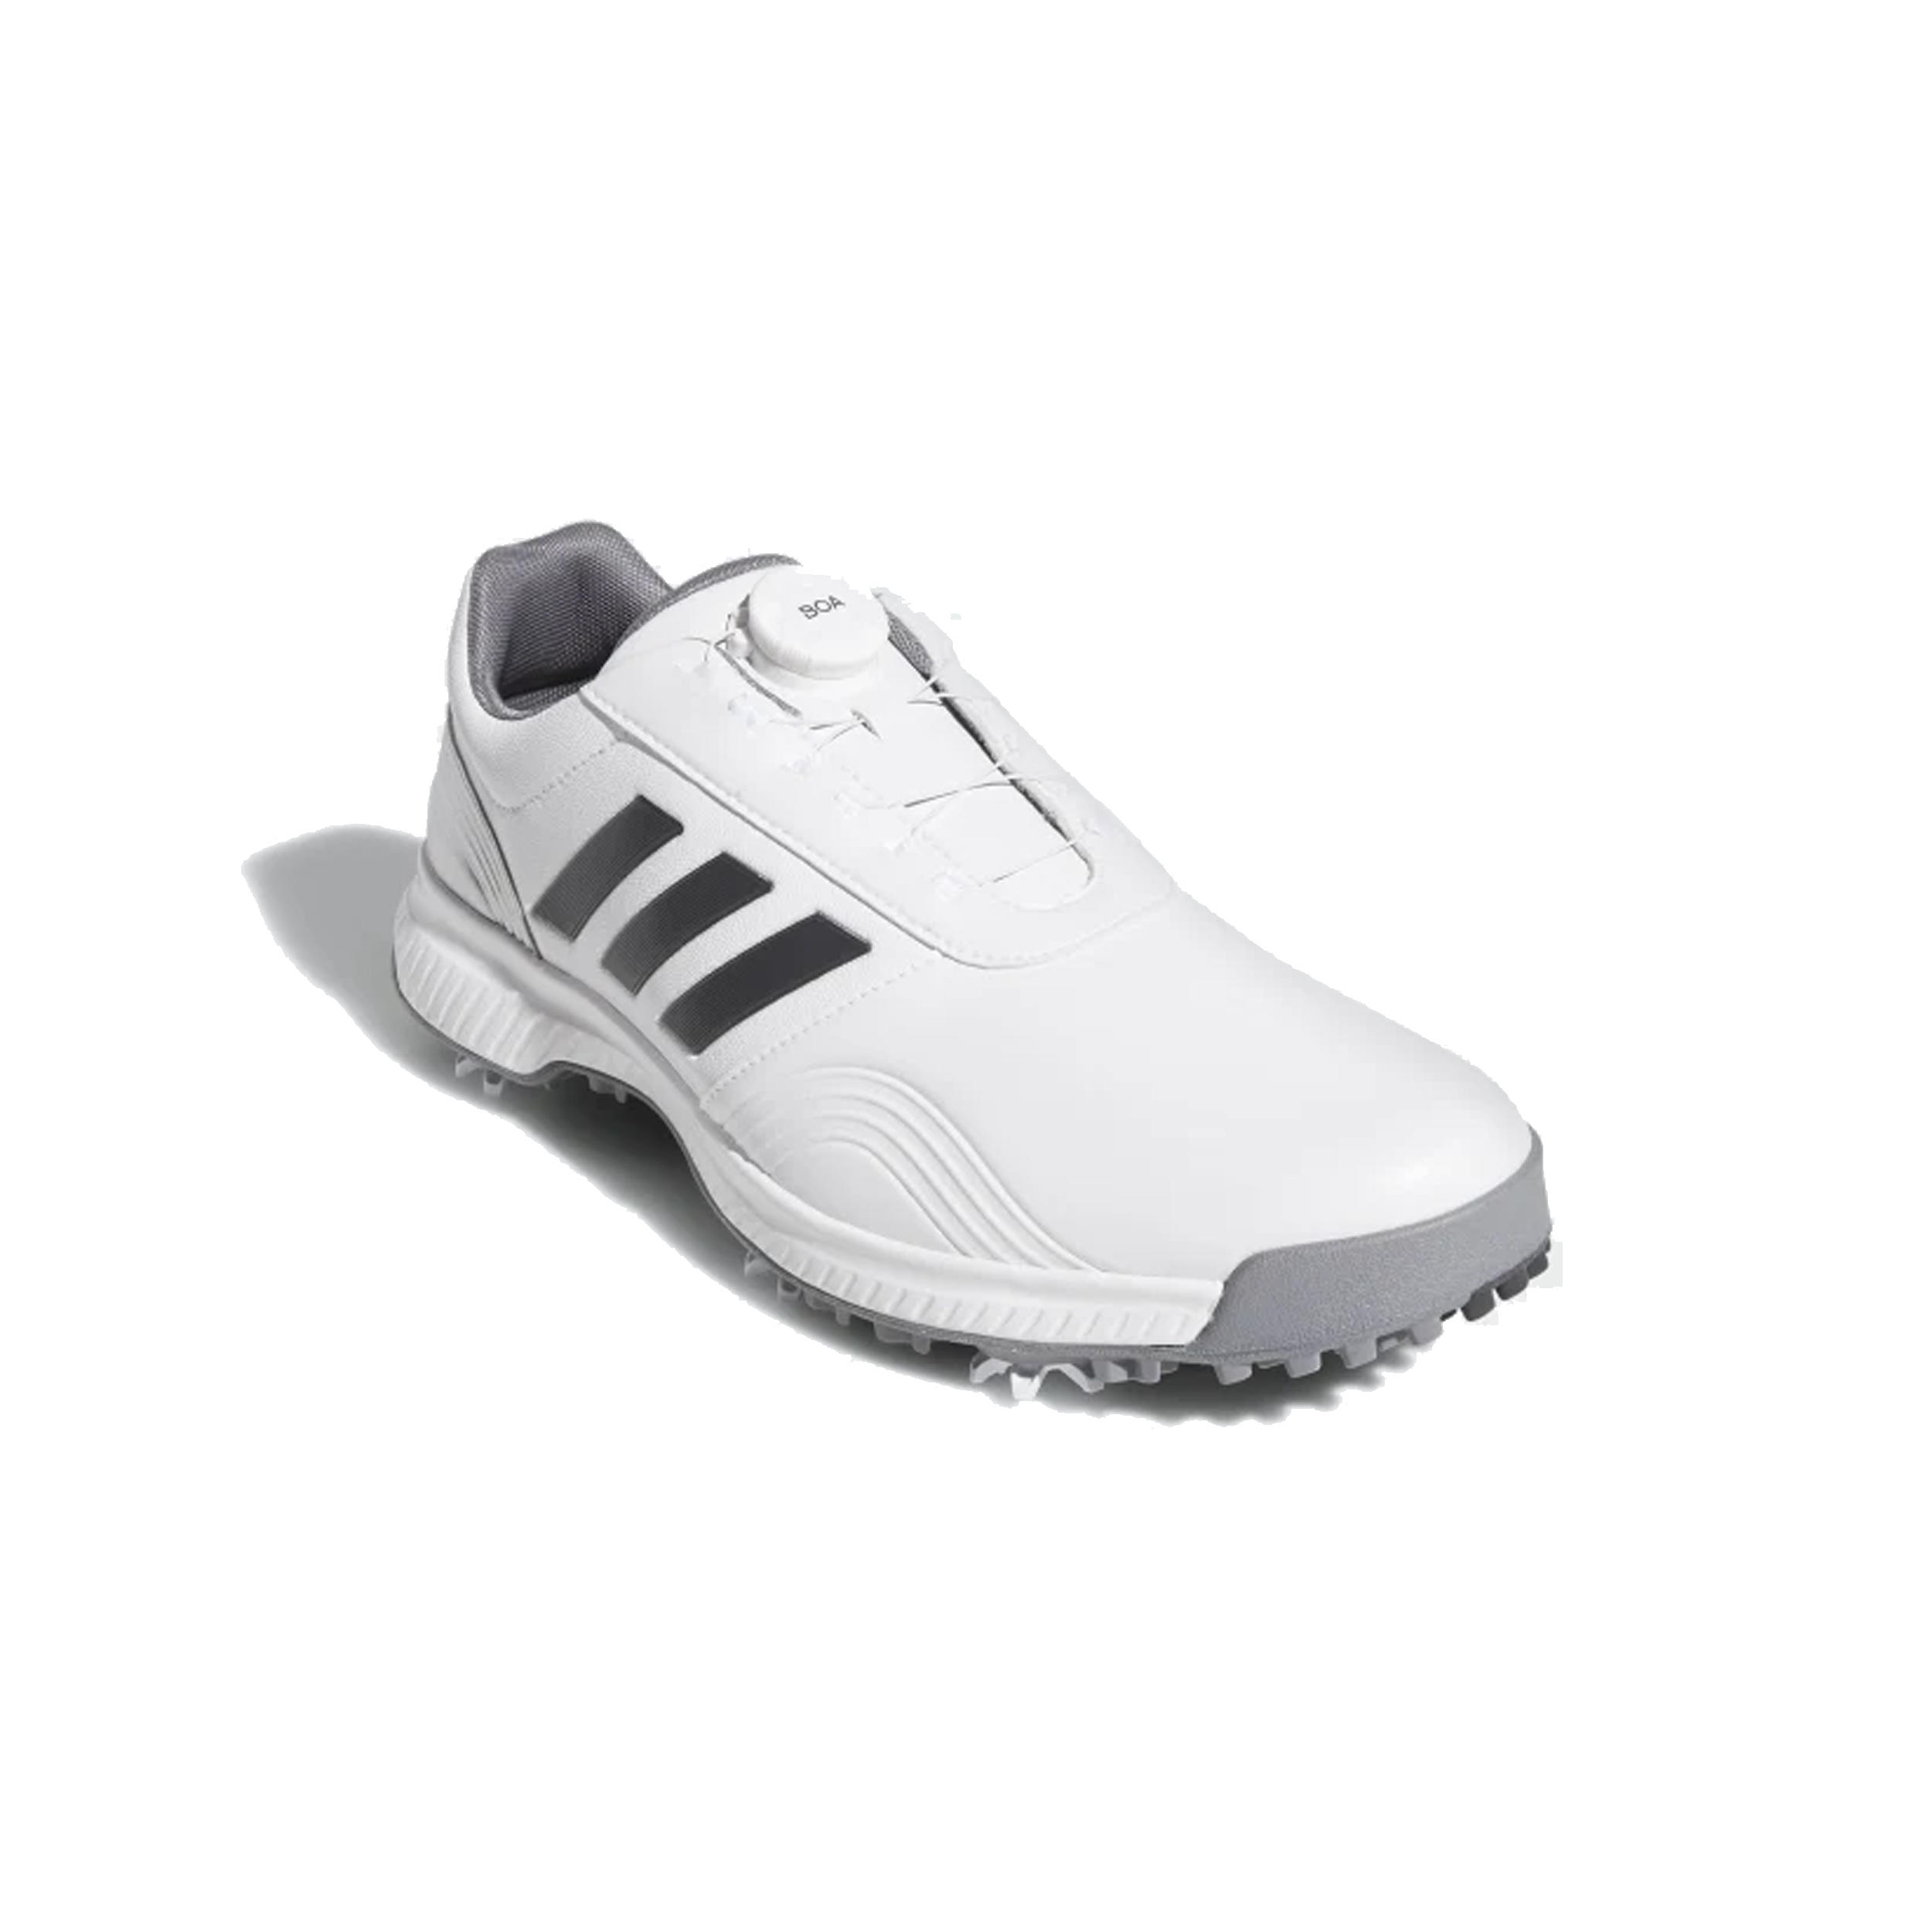 boys golf shoes size 12